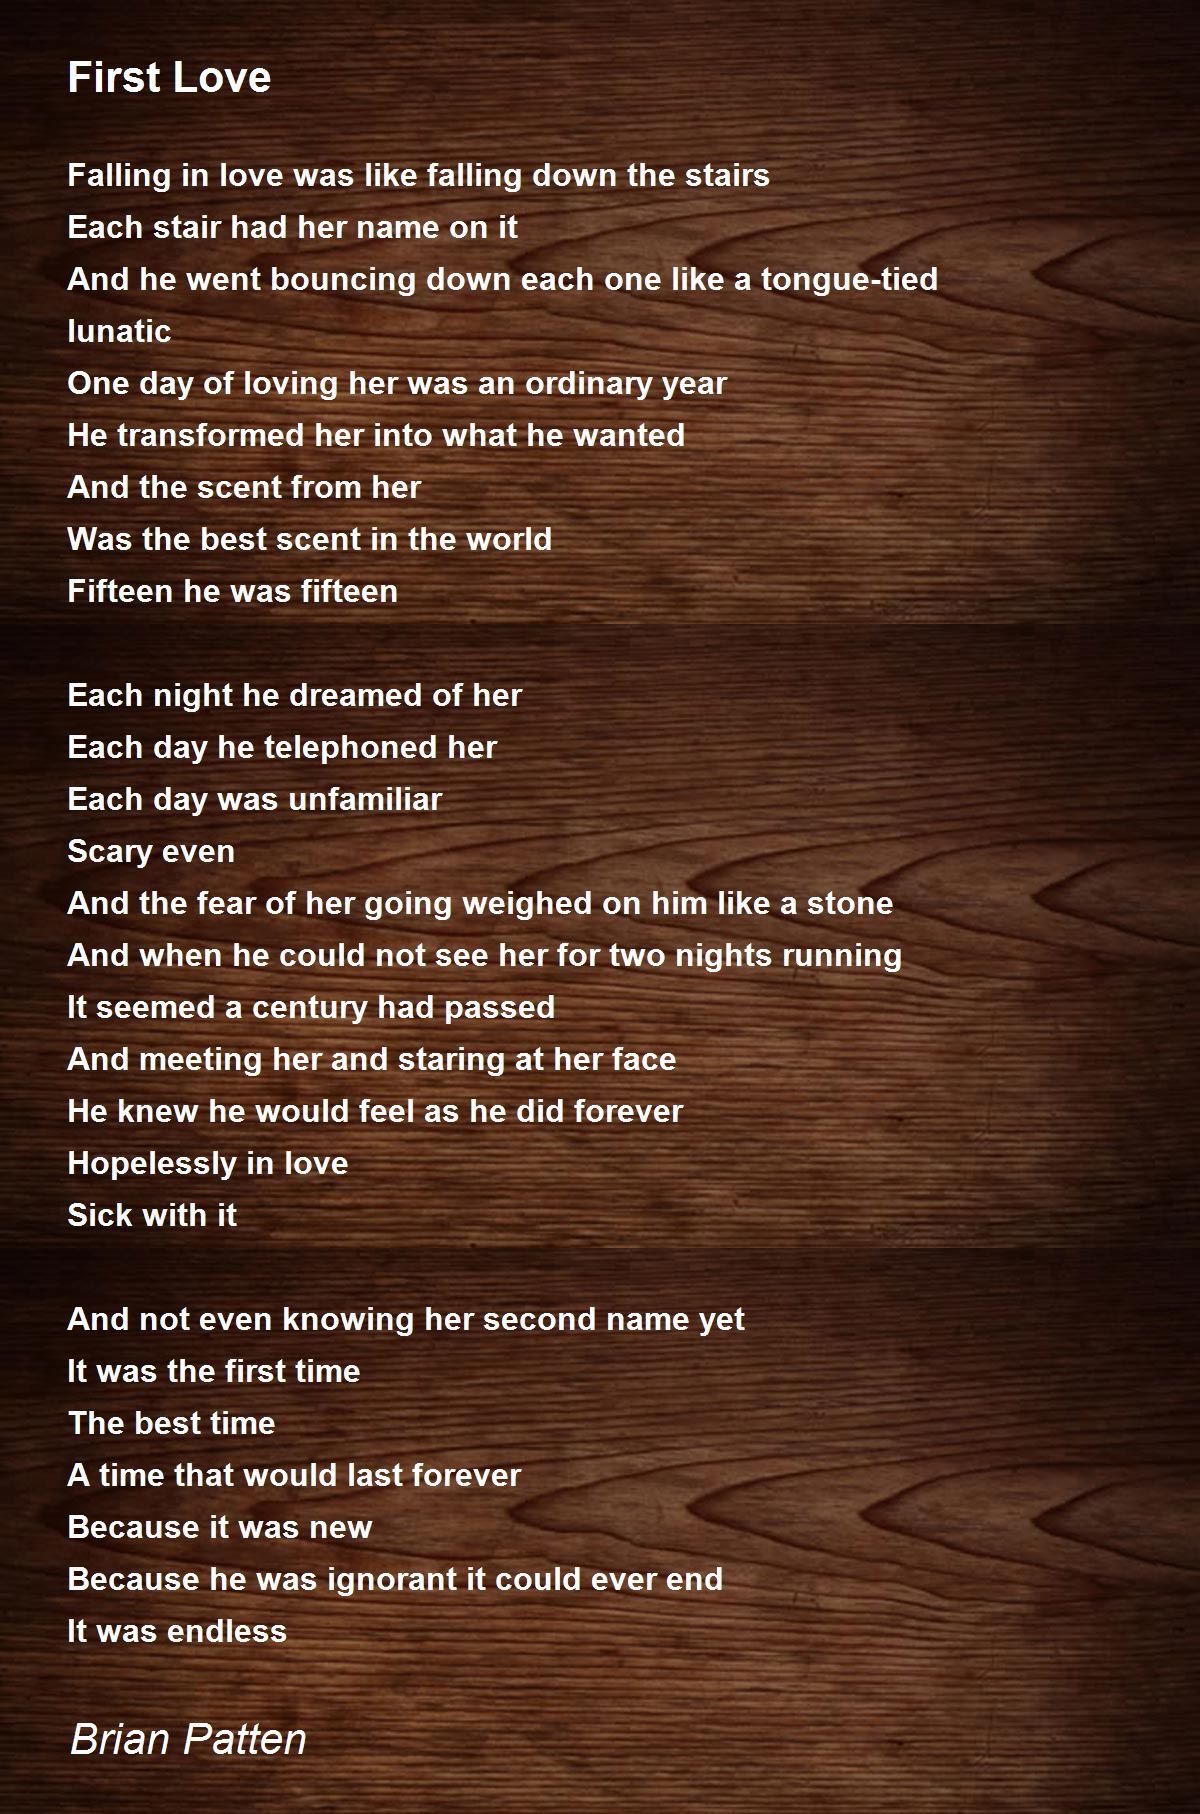 First Love Poem by Brian Patten - Poem Hunter